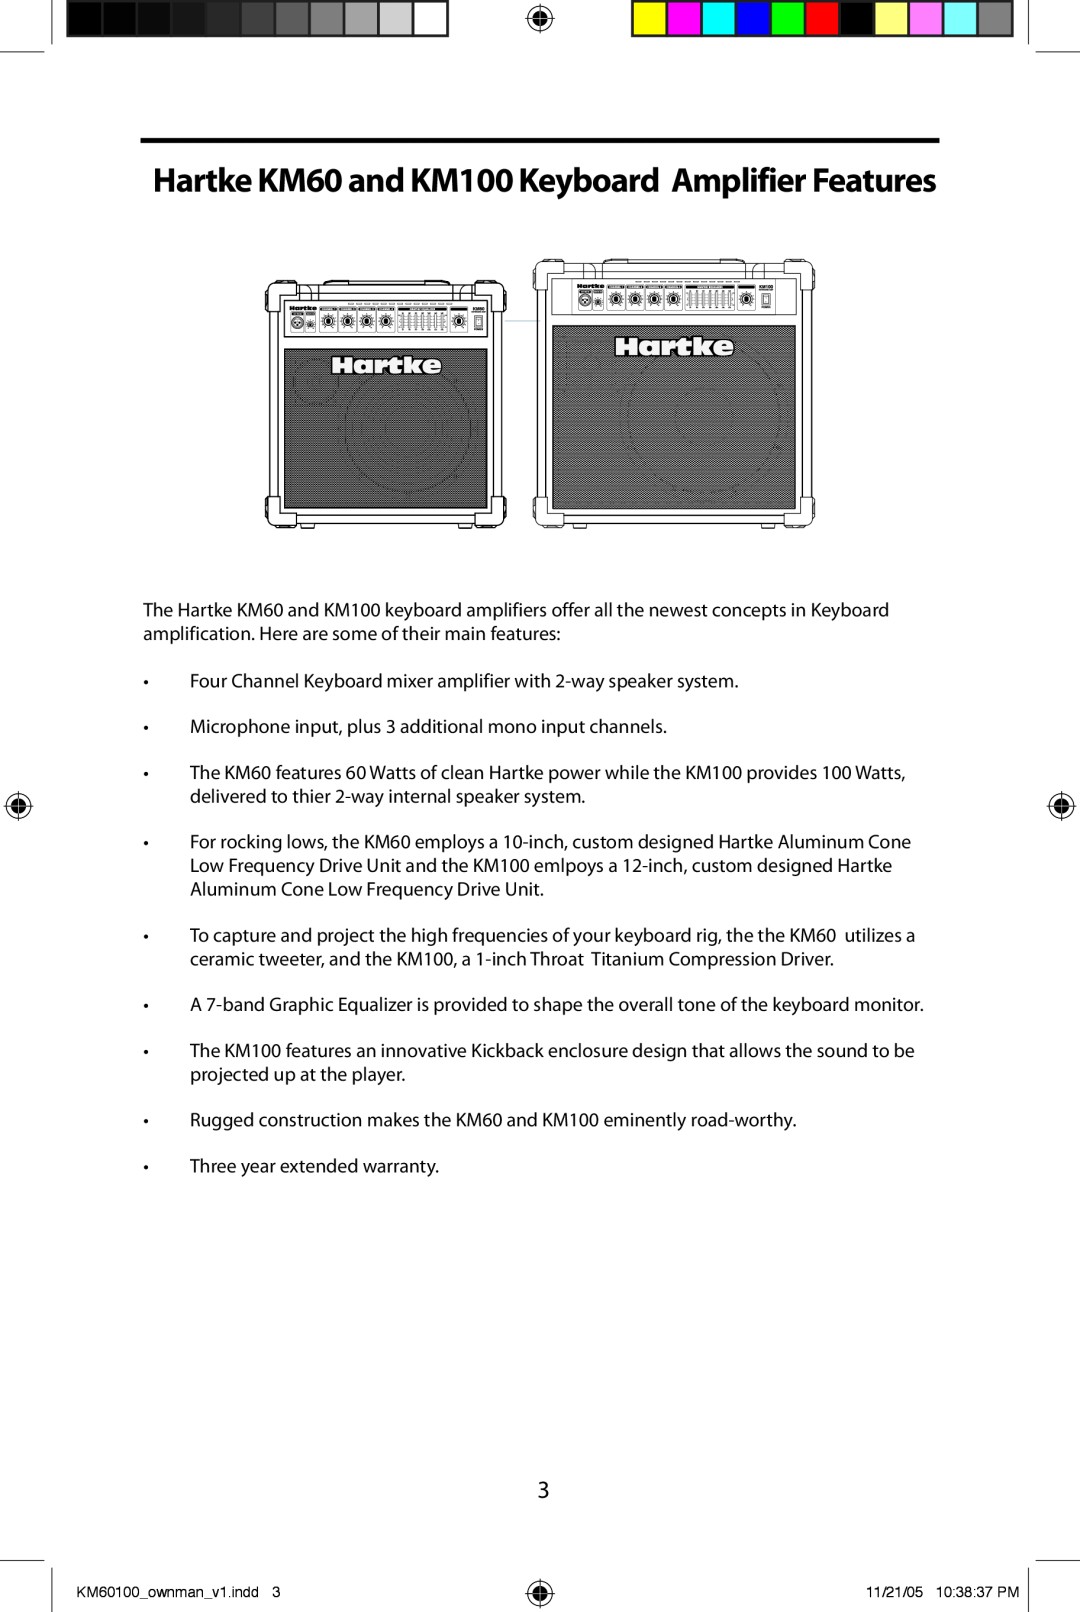 Samson manual Hartke KM60 and KM100 Keyboard Amplifier Features 